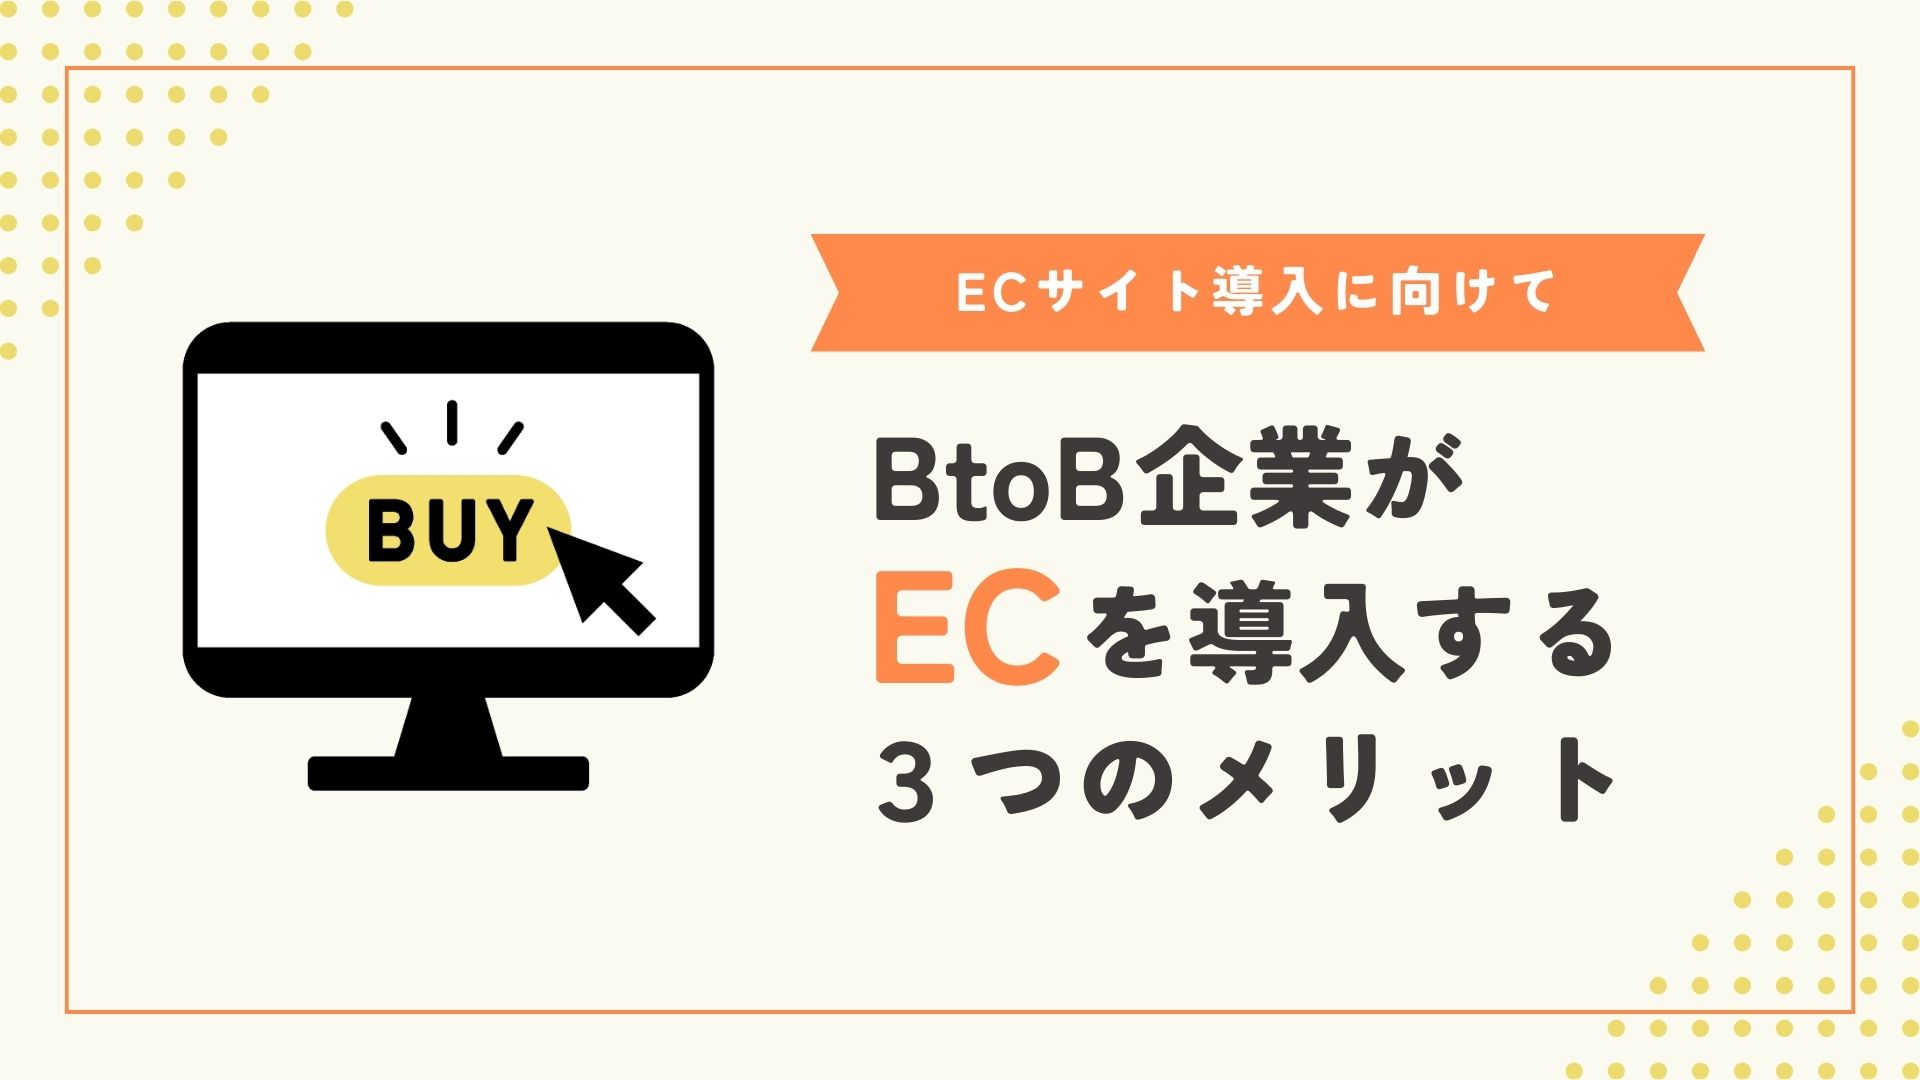 ECサイト導入に向けて
BtoB企業がECを導入する3つのメリット